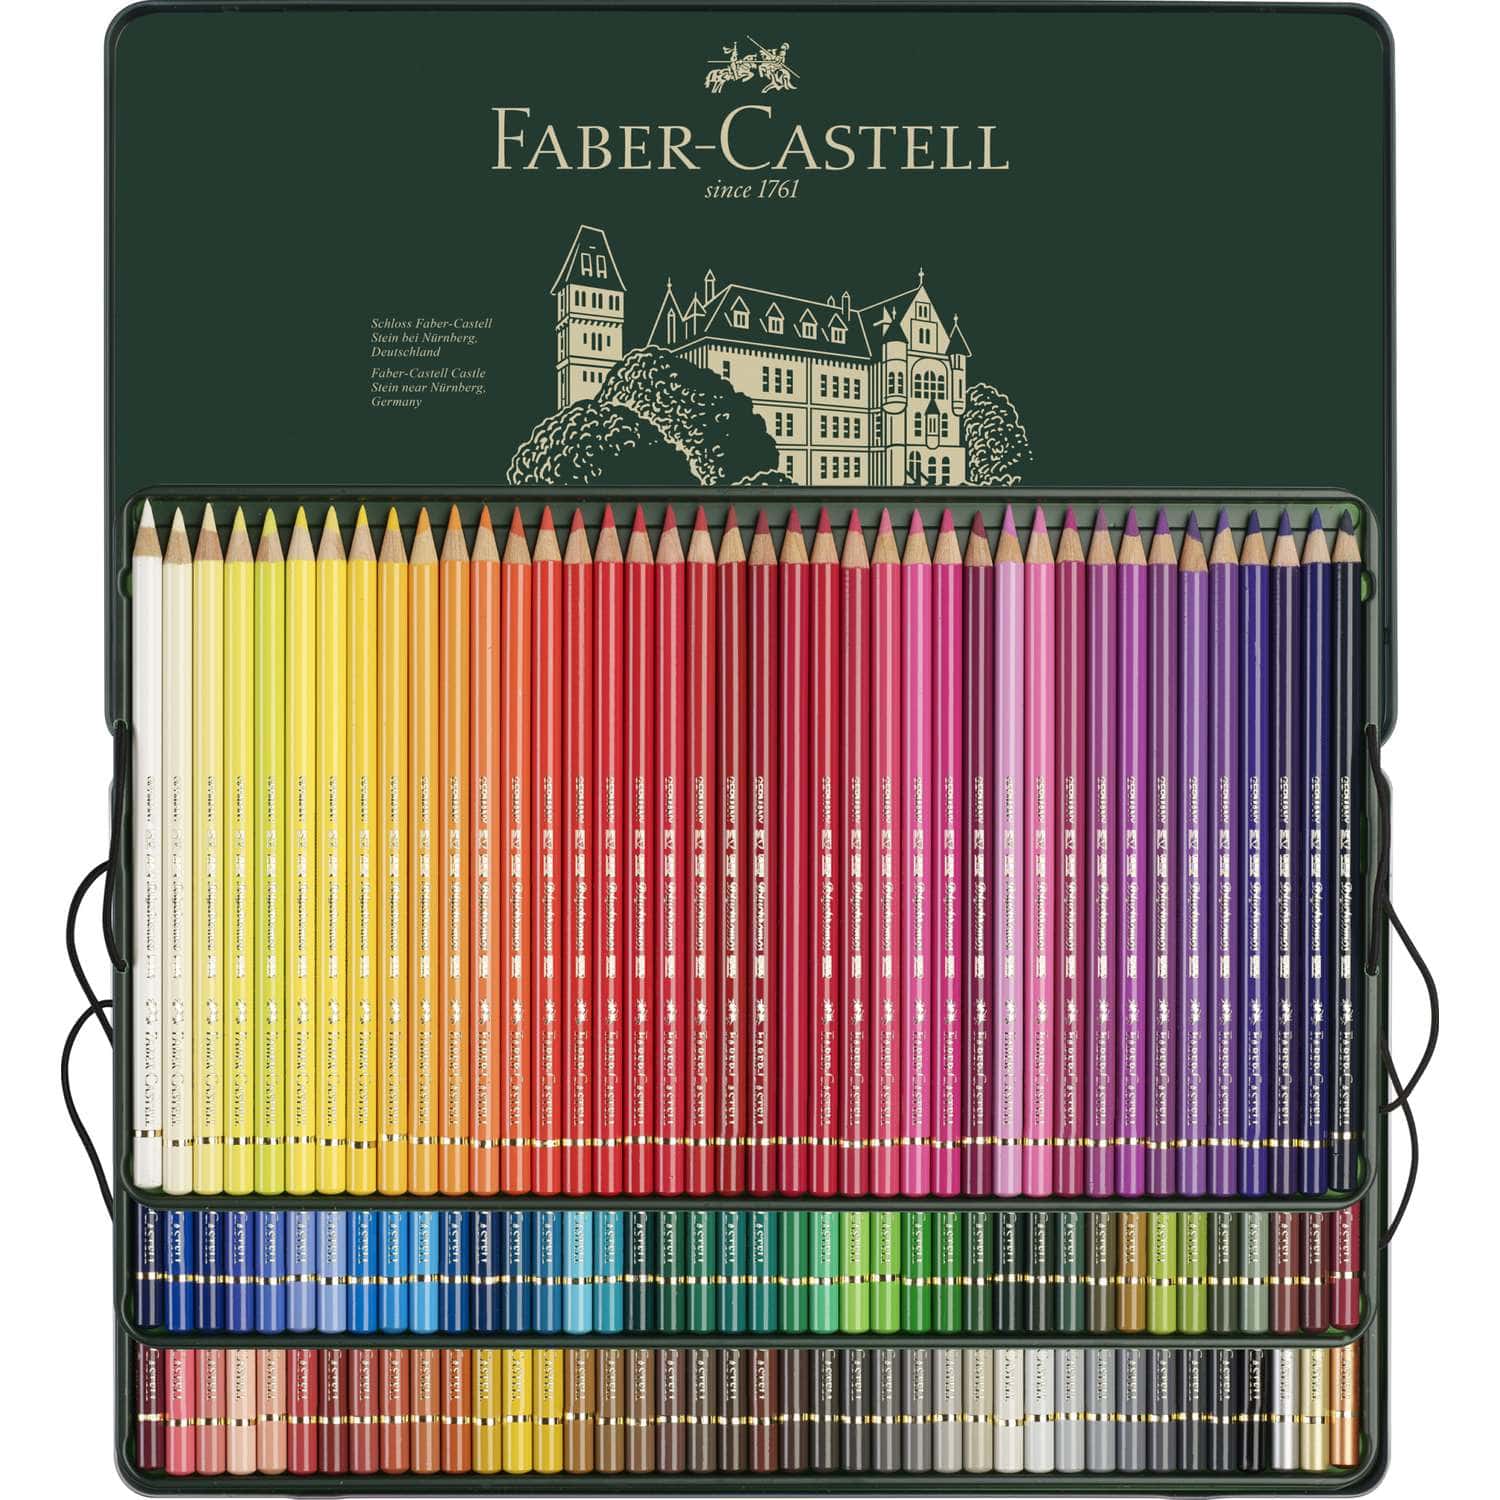 Faber Castell Polychromos Artists Pencil tin set of 60 - Best